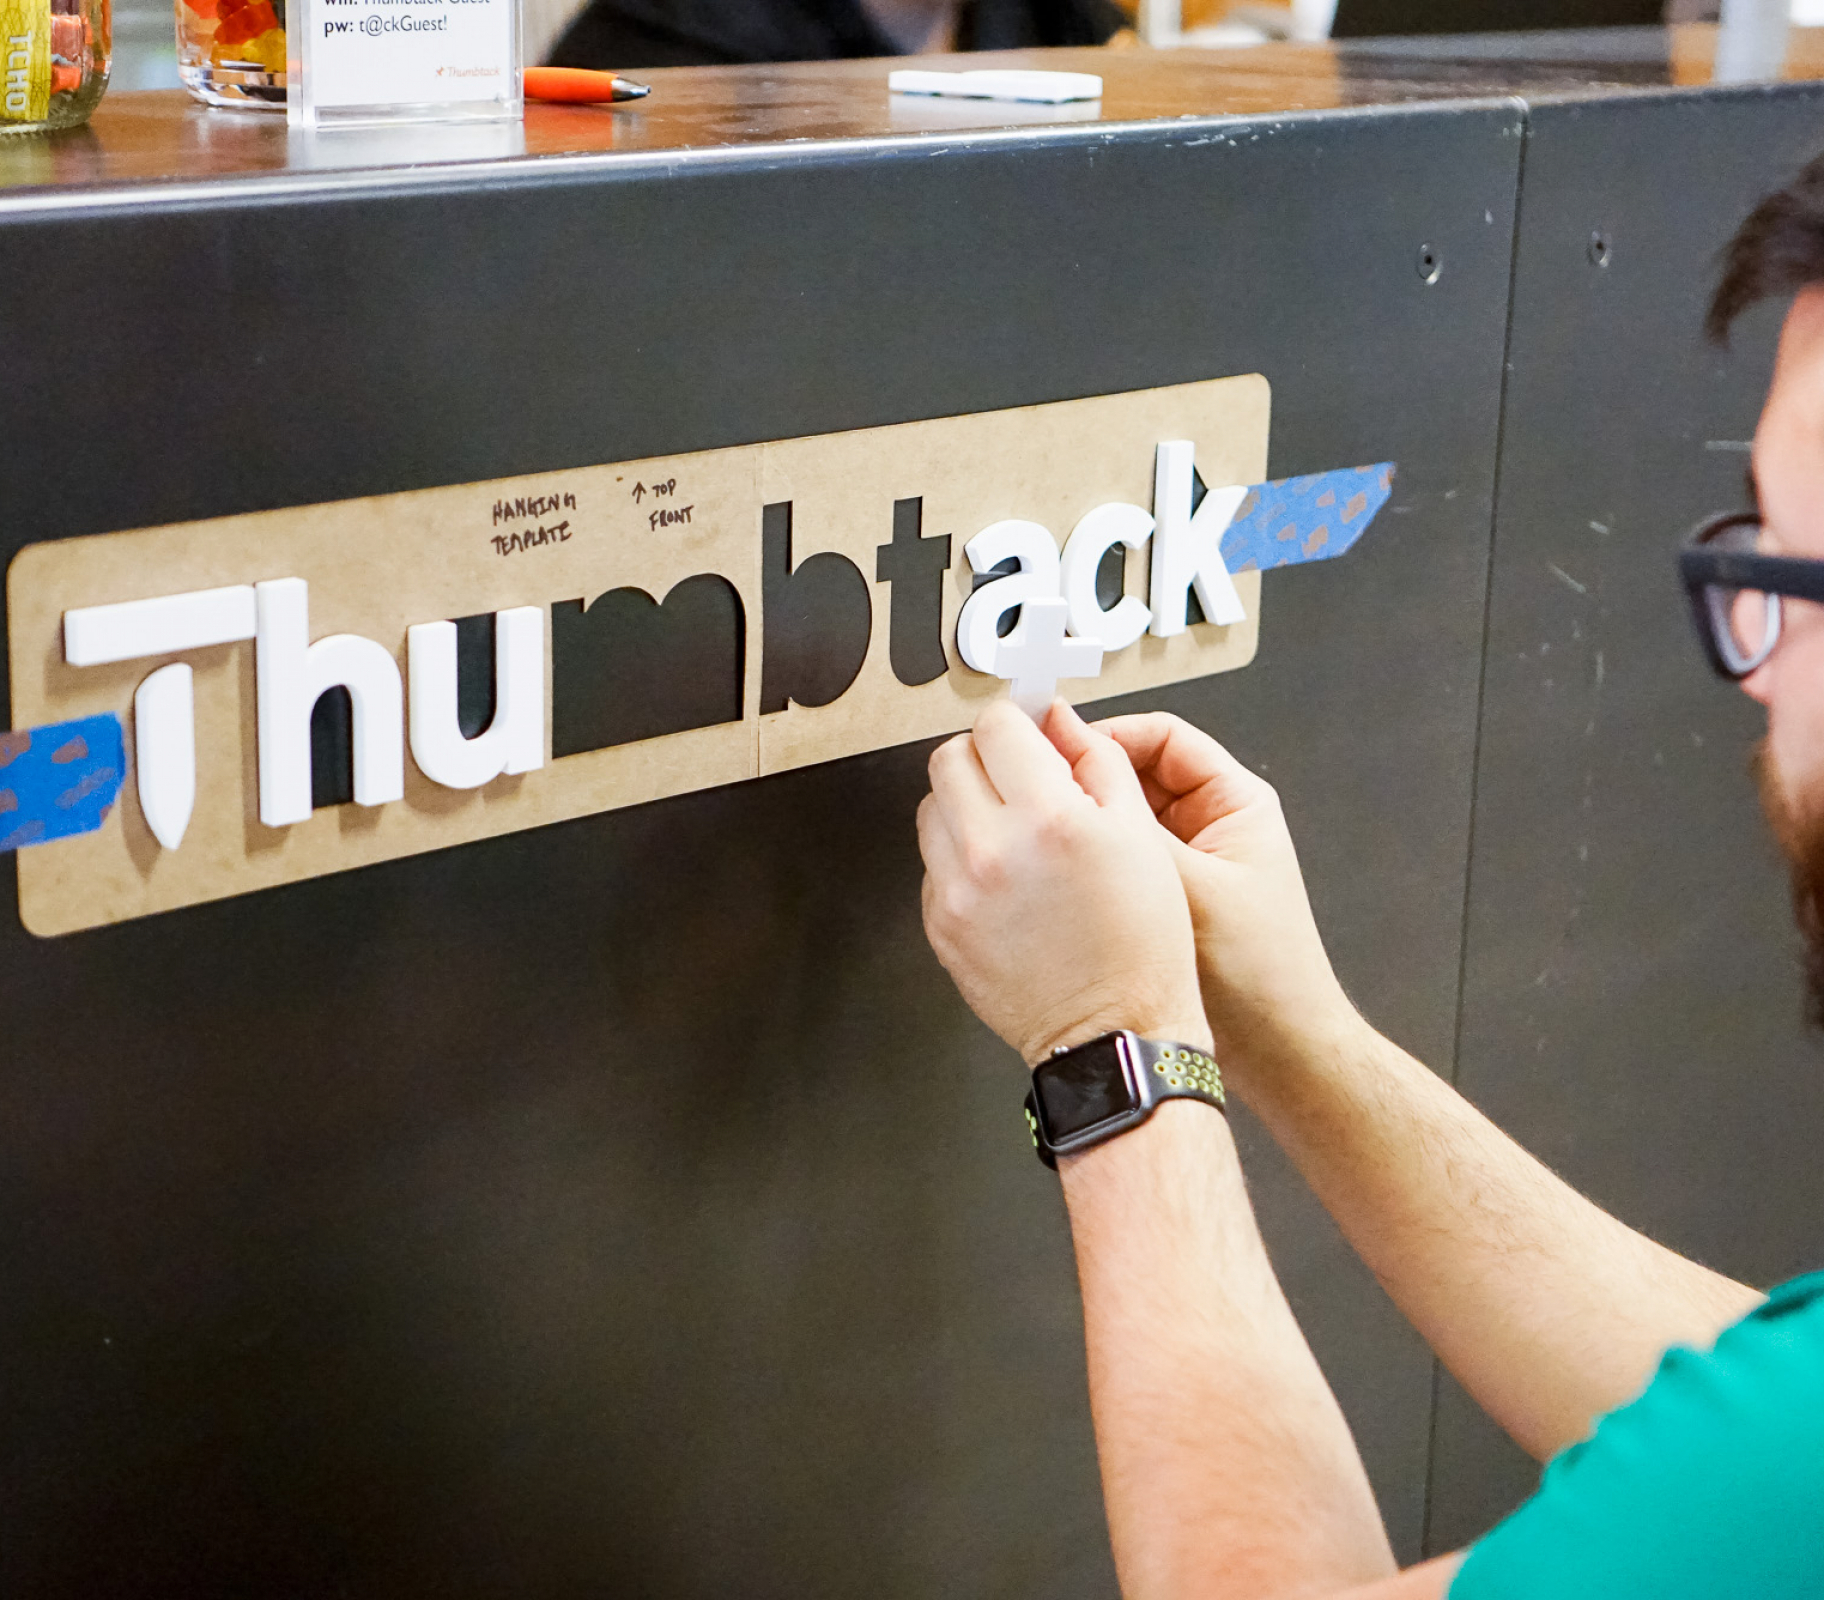 Thumbtack front desk sign process